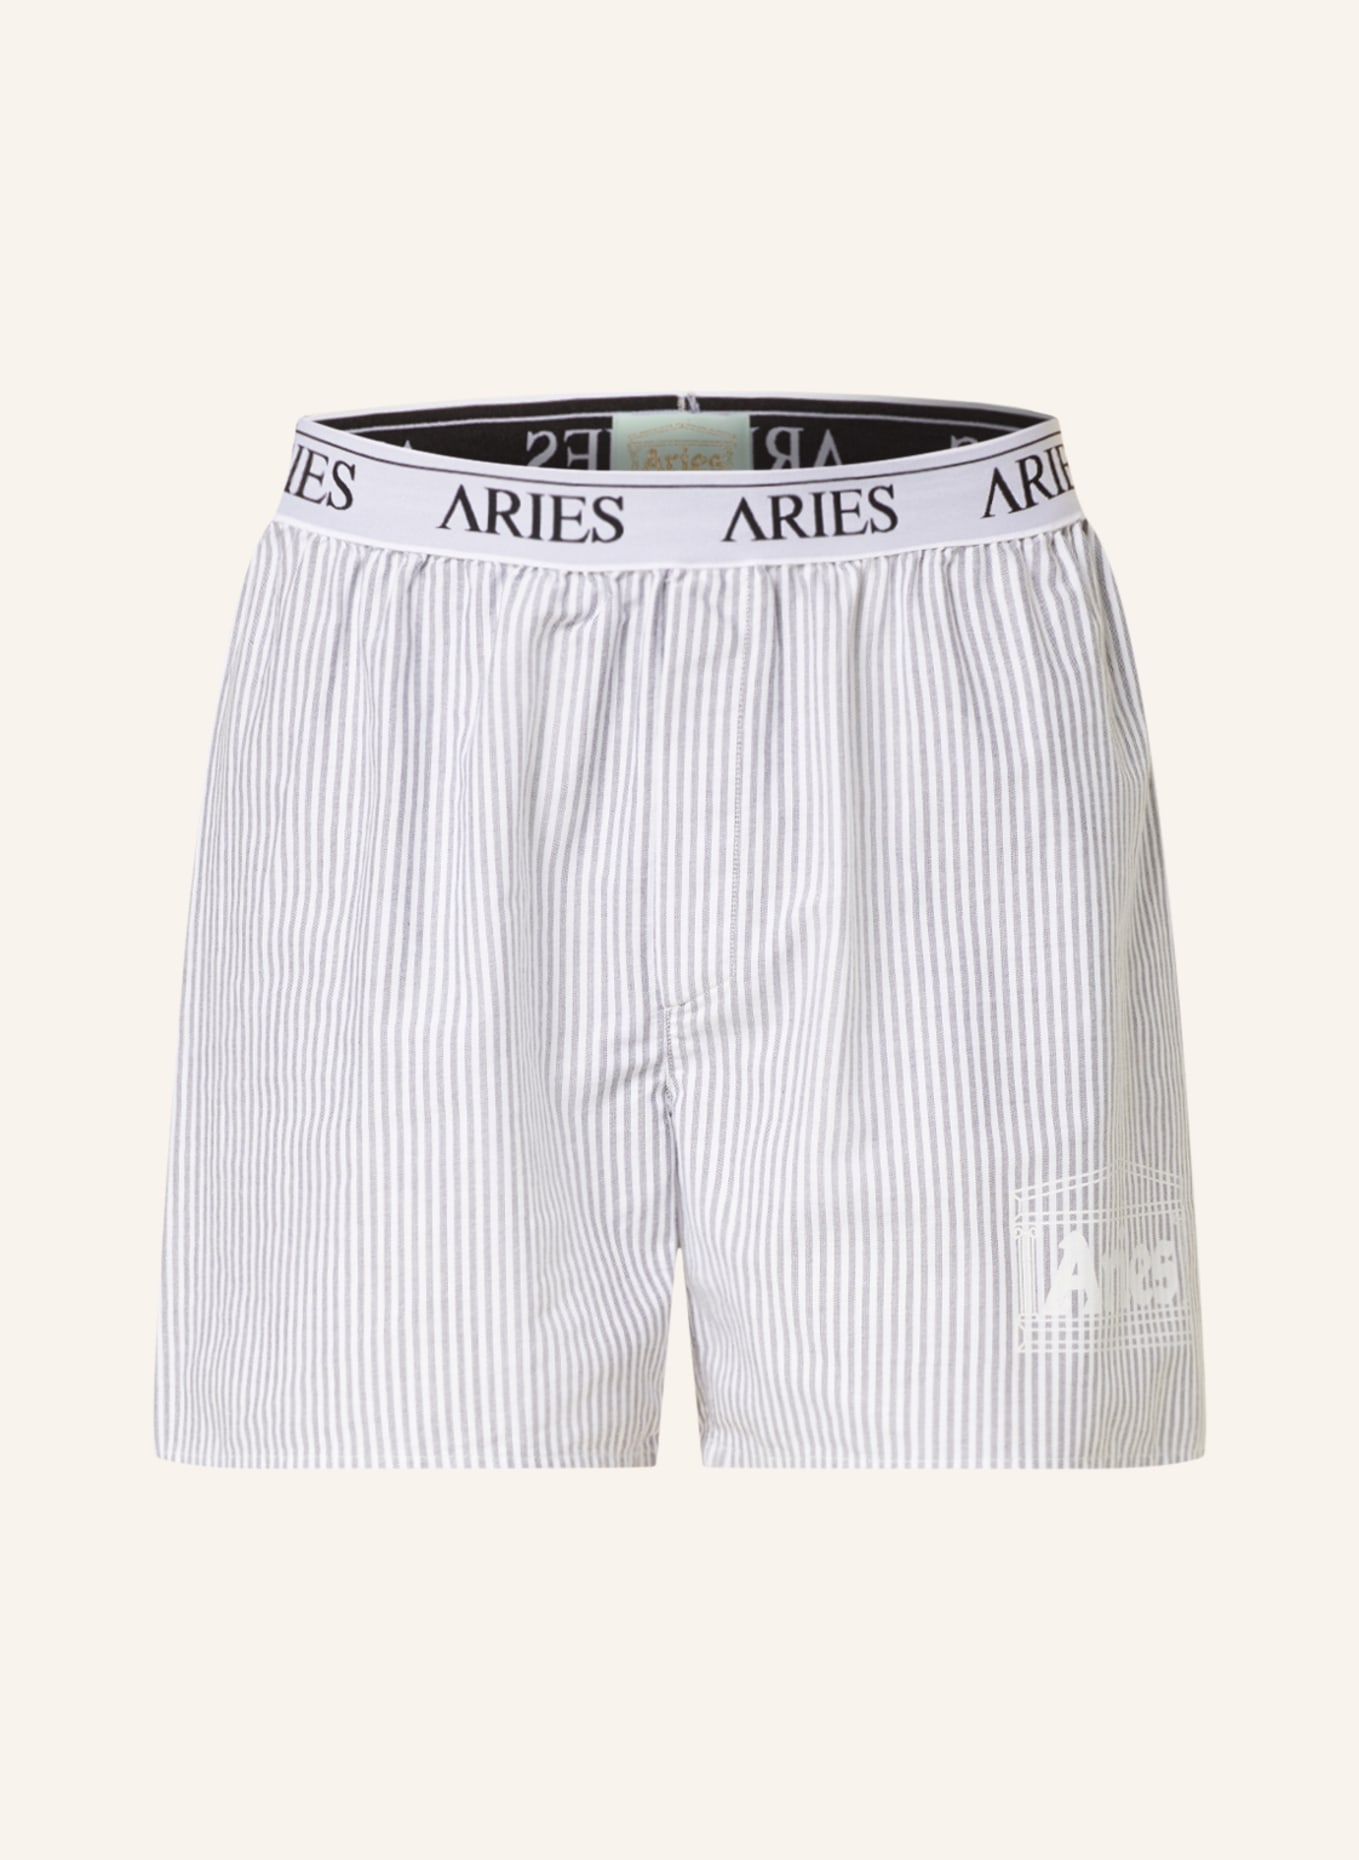 Aries Arise Web-Boxershorts, Farbe: BLAUGRAU/ WEISS (Bild 1)